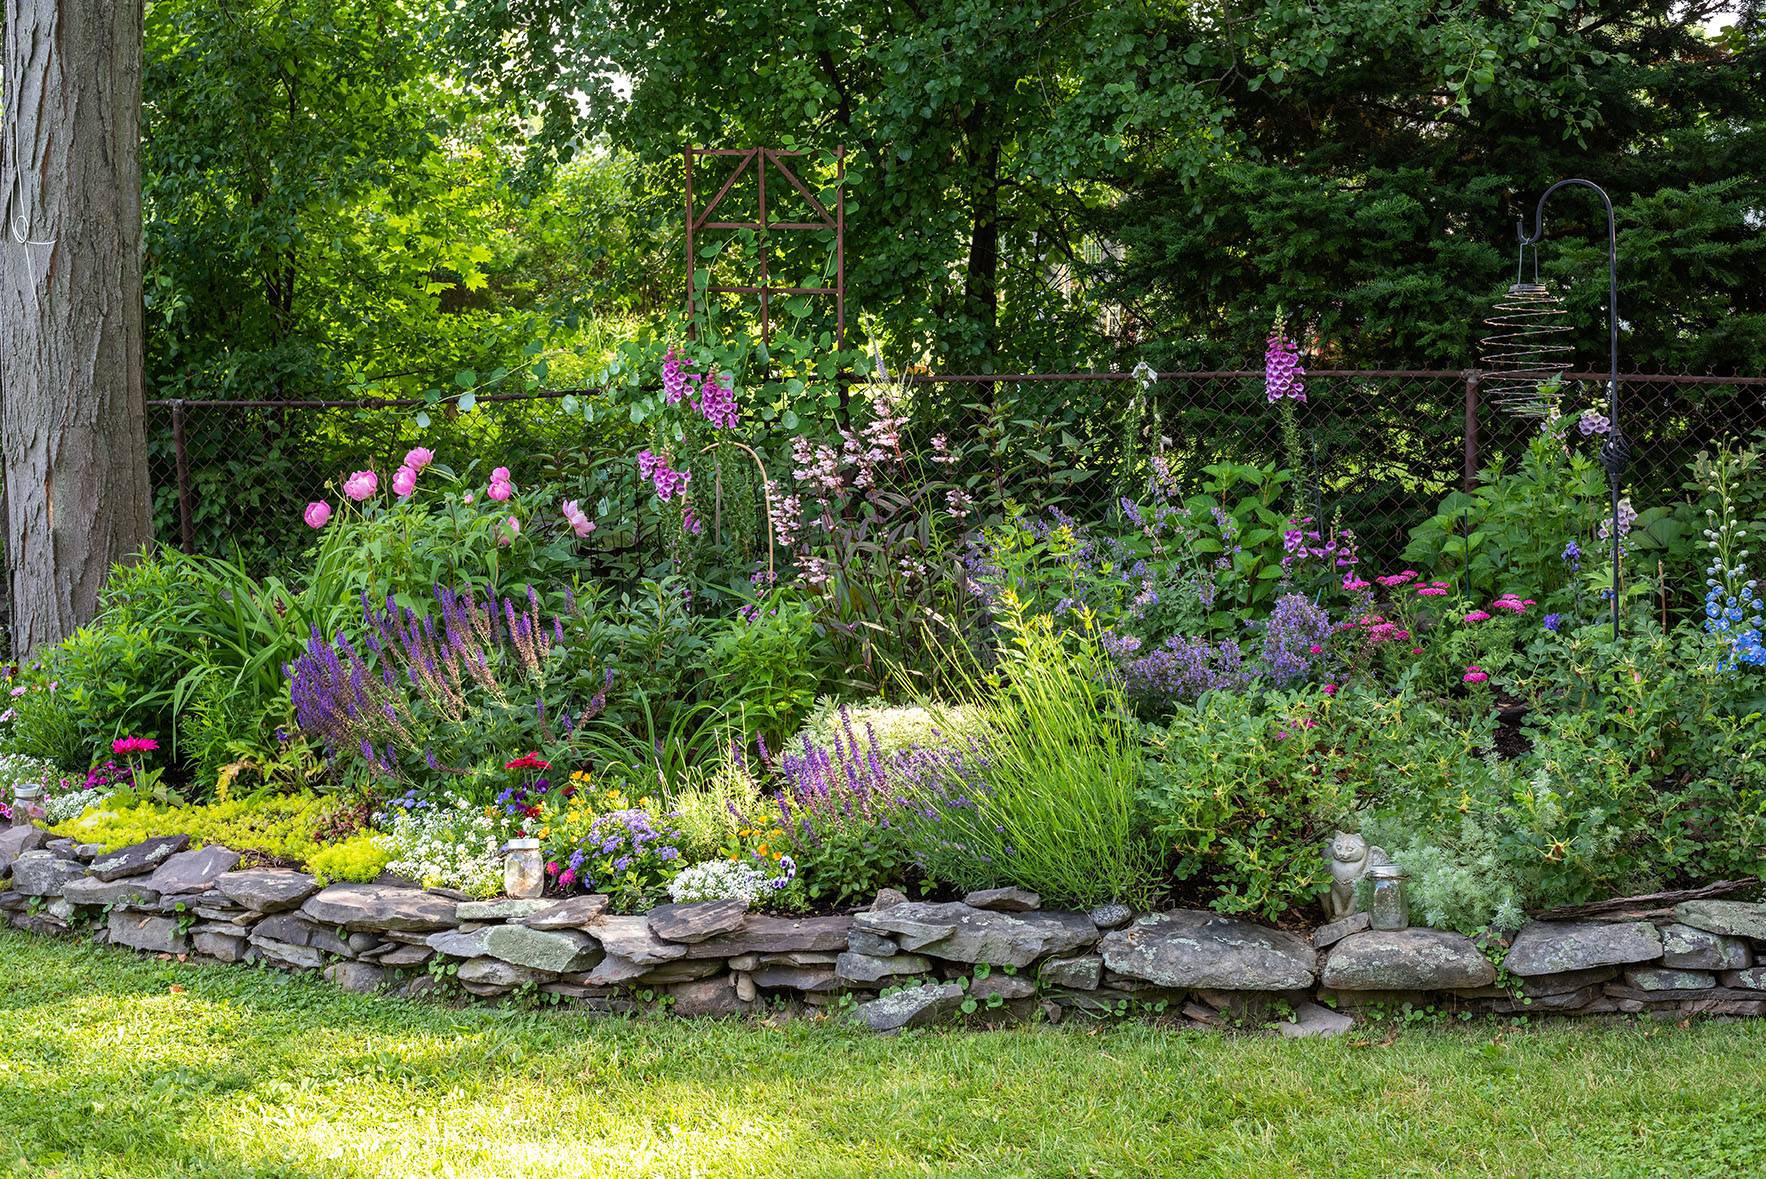 Wonderful Backyard Landscaping Ideas